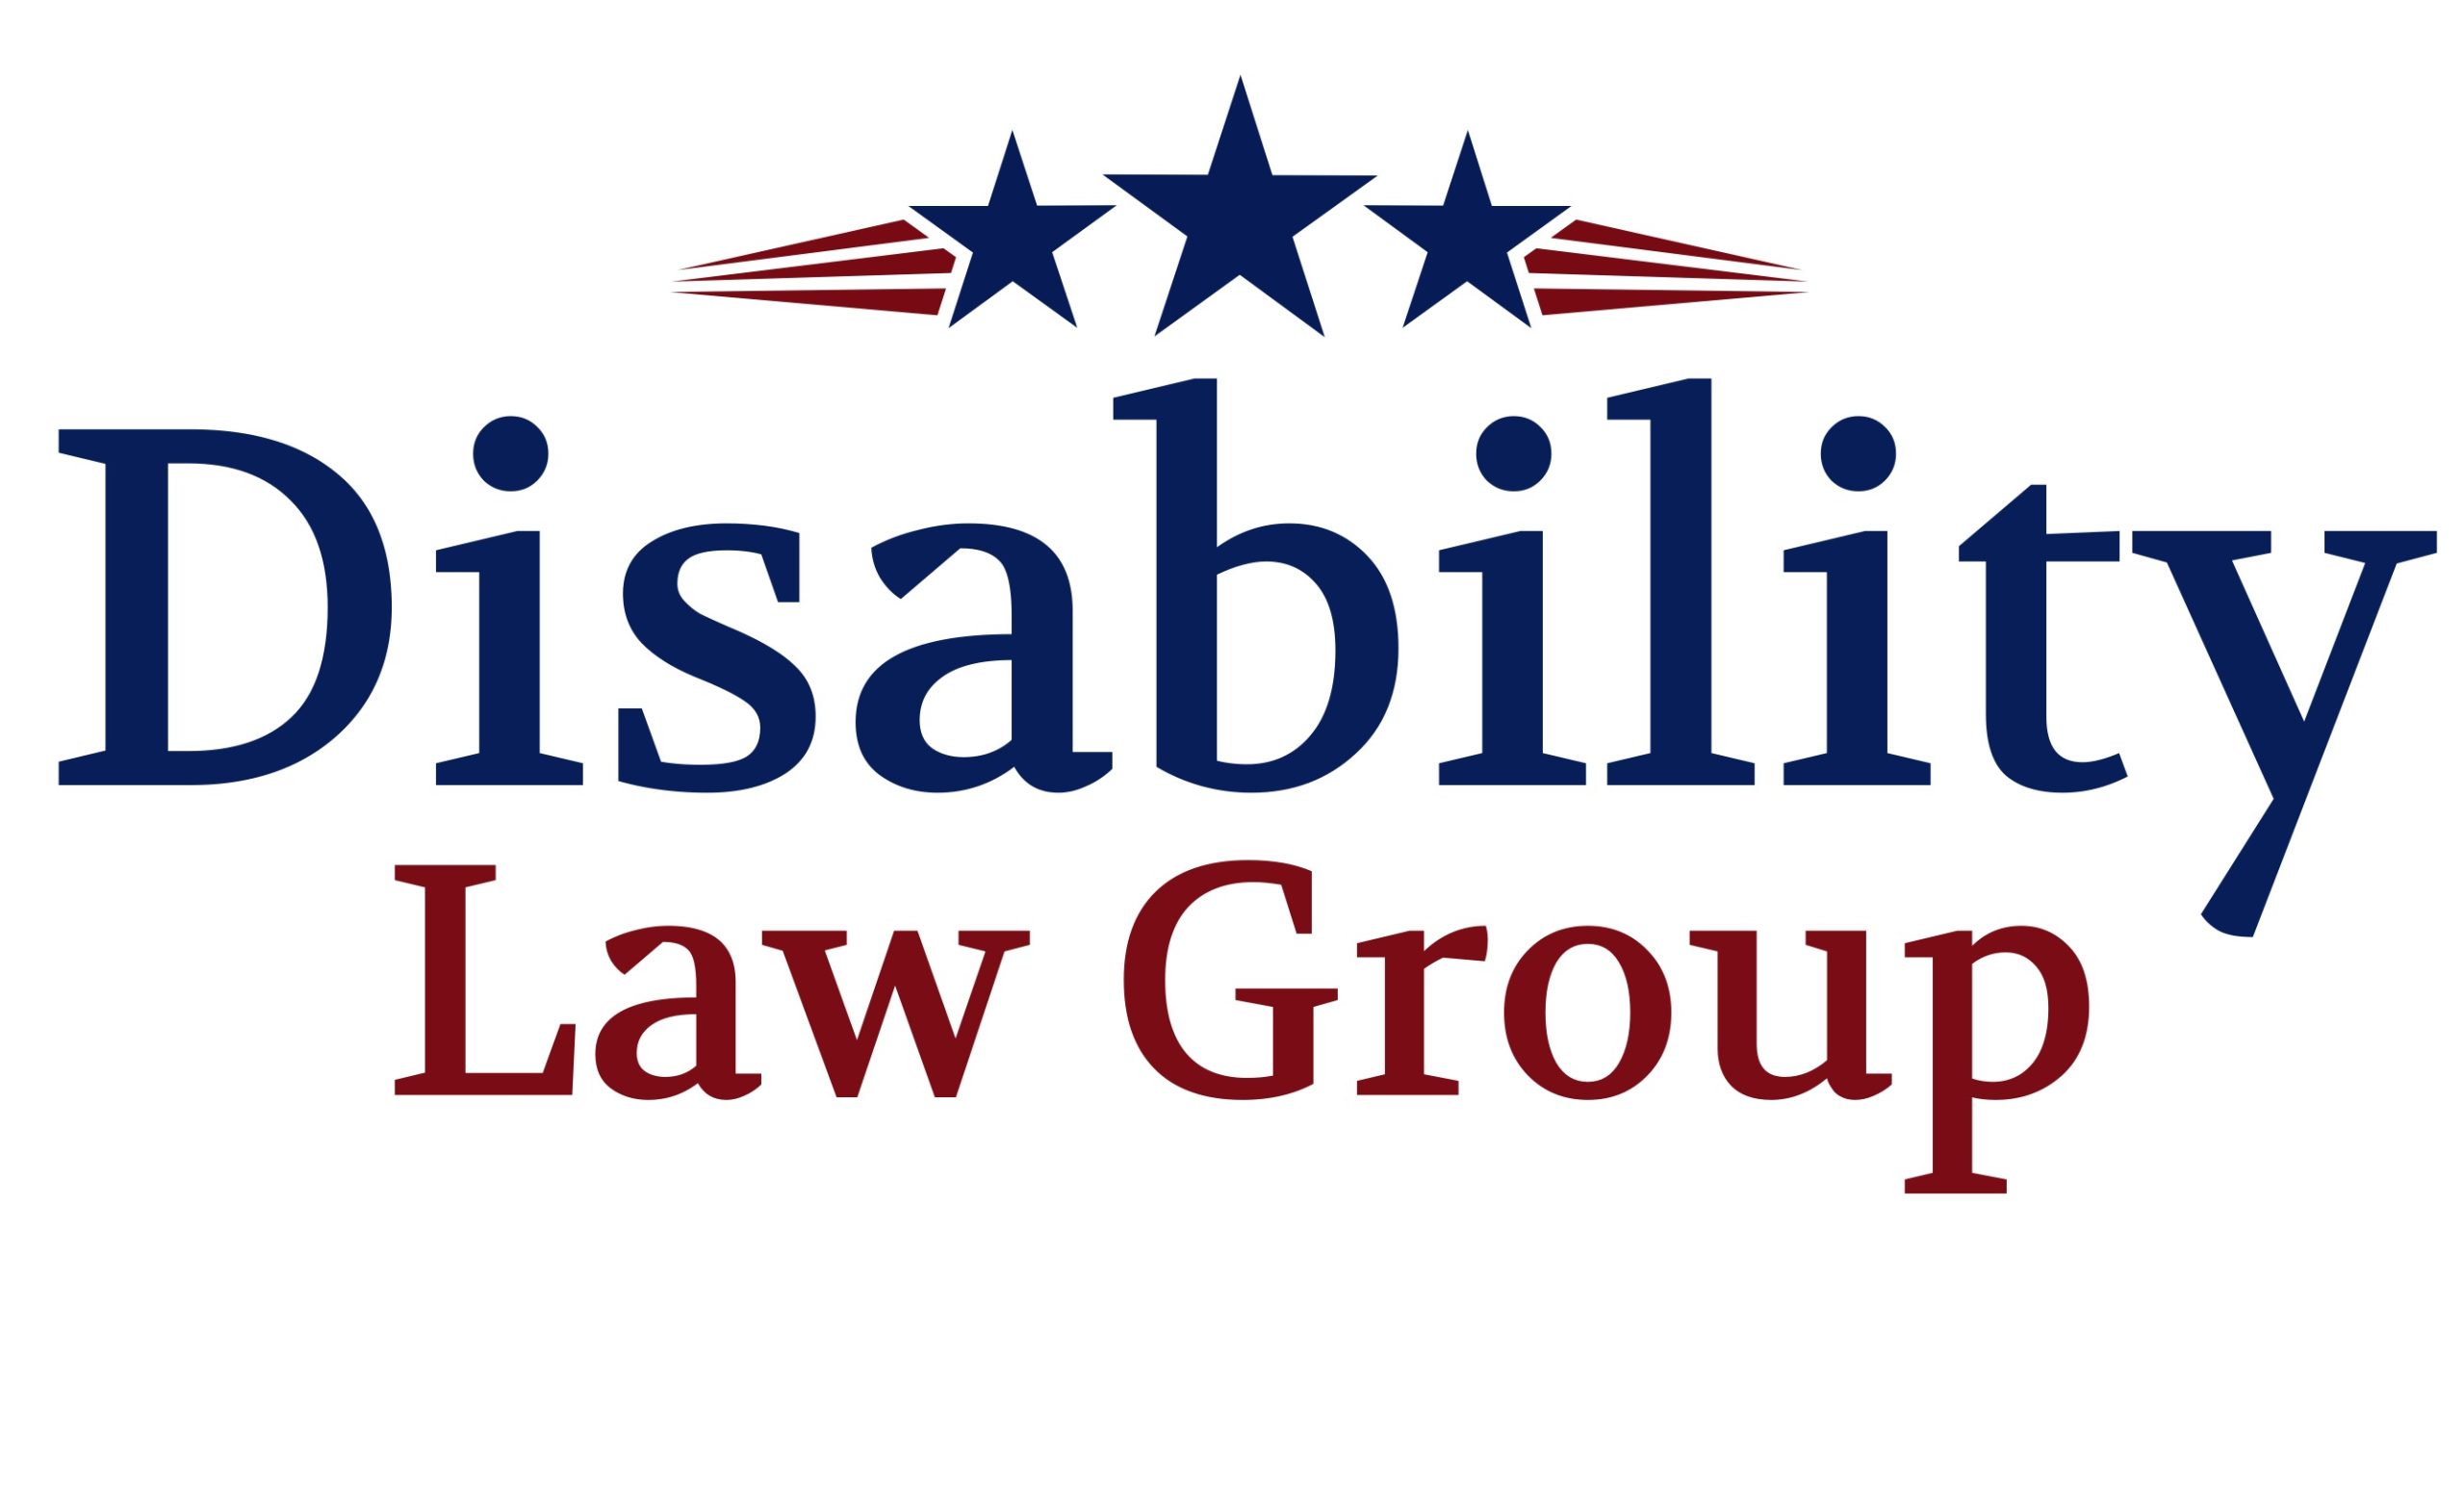 https://glsns.com/wp-content/uploads/2022/09/logo.sponsor.disabilitylawgrp-scaled.jpg